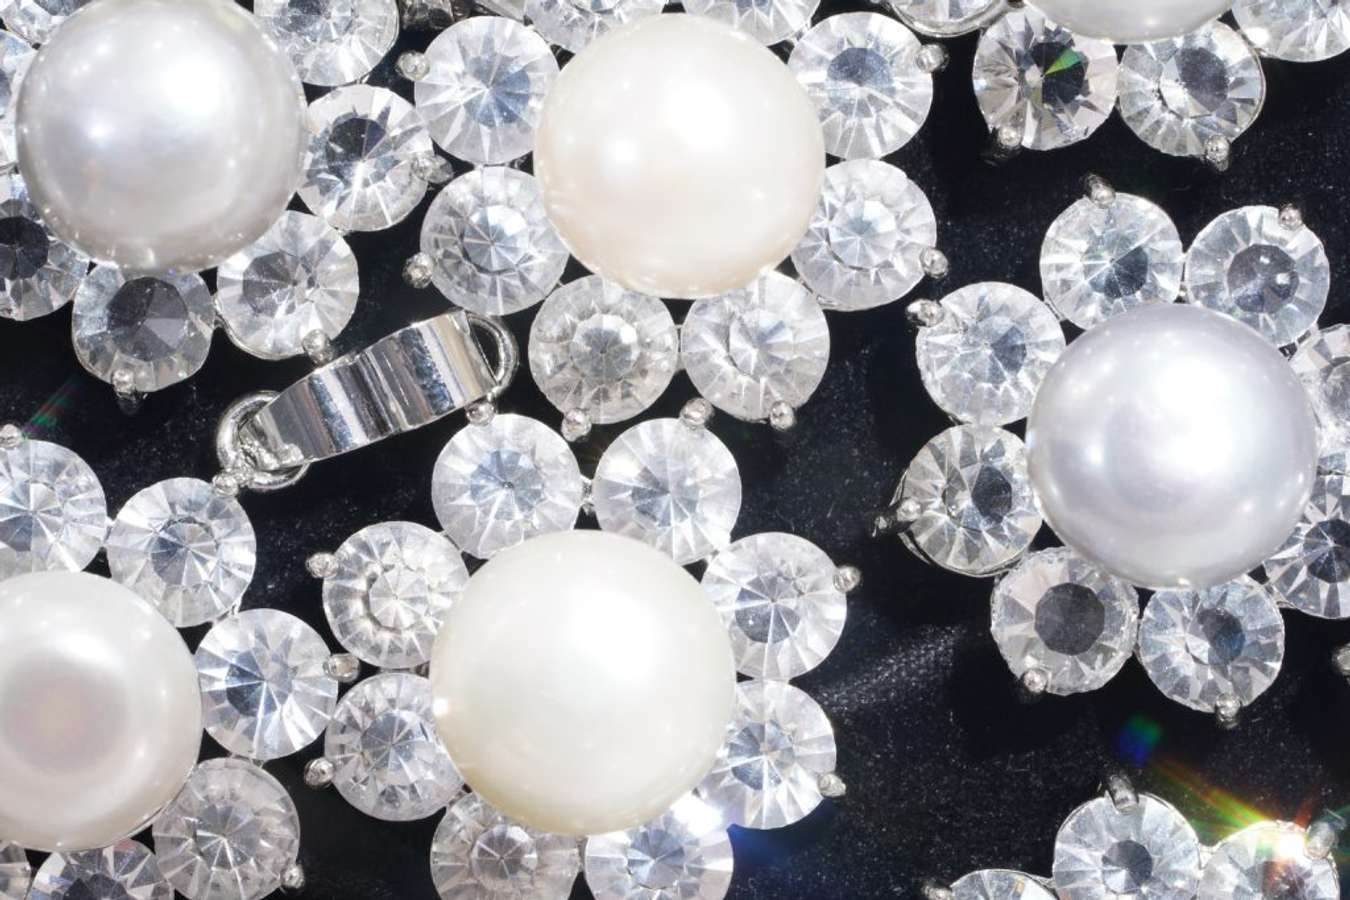 Sabah pearls